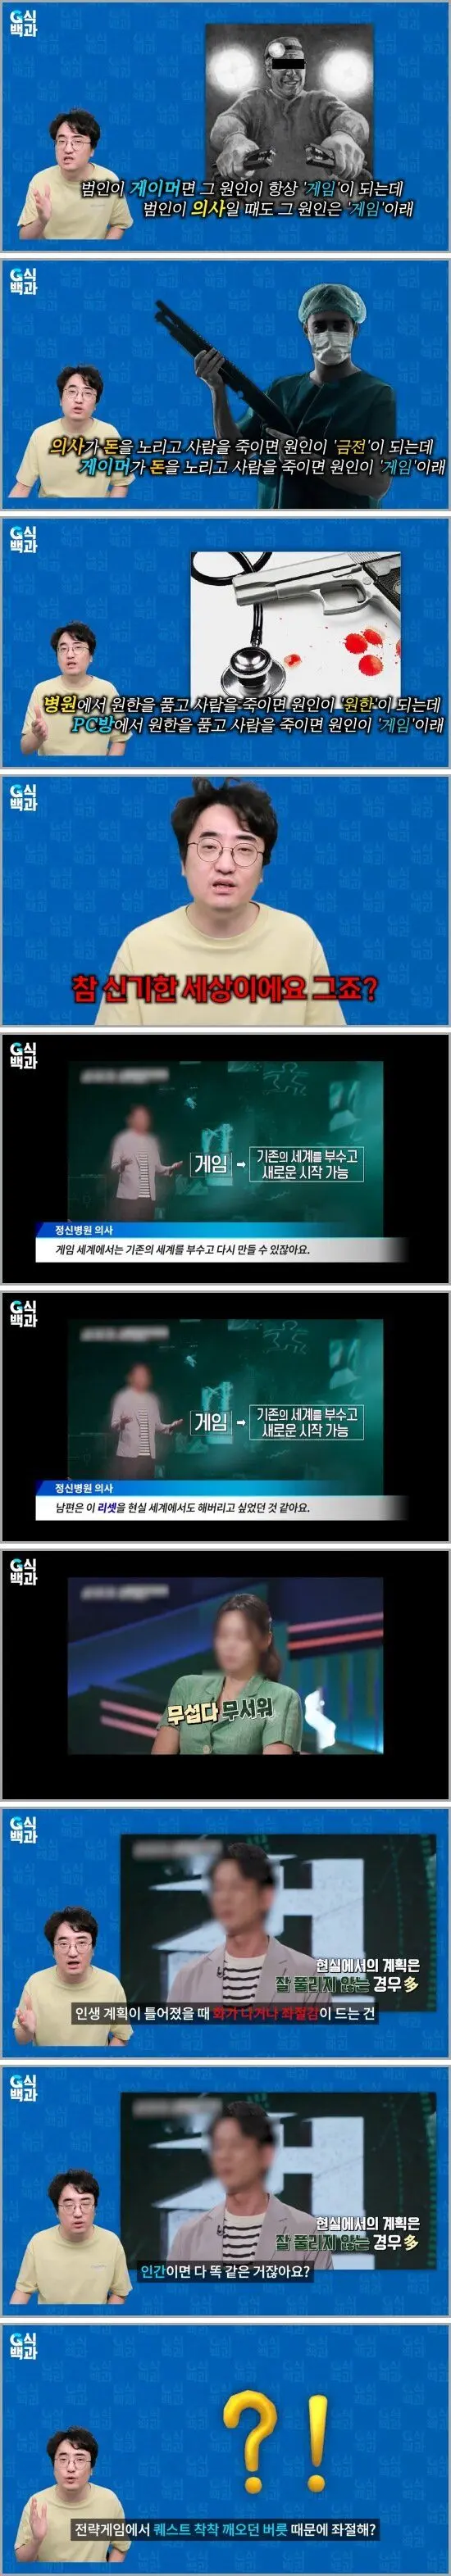 G식백과 한국에서 살인이 게임탓인 이유 | mbong.kr 엠봉